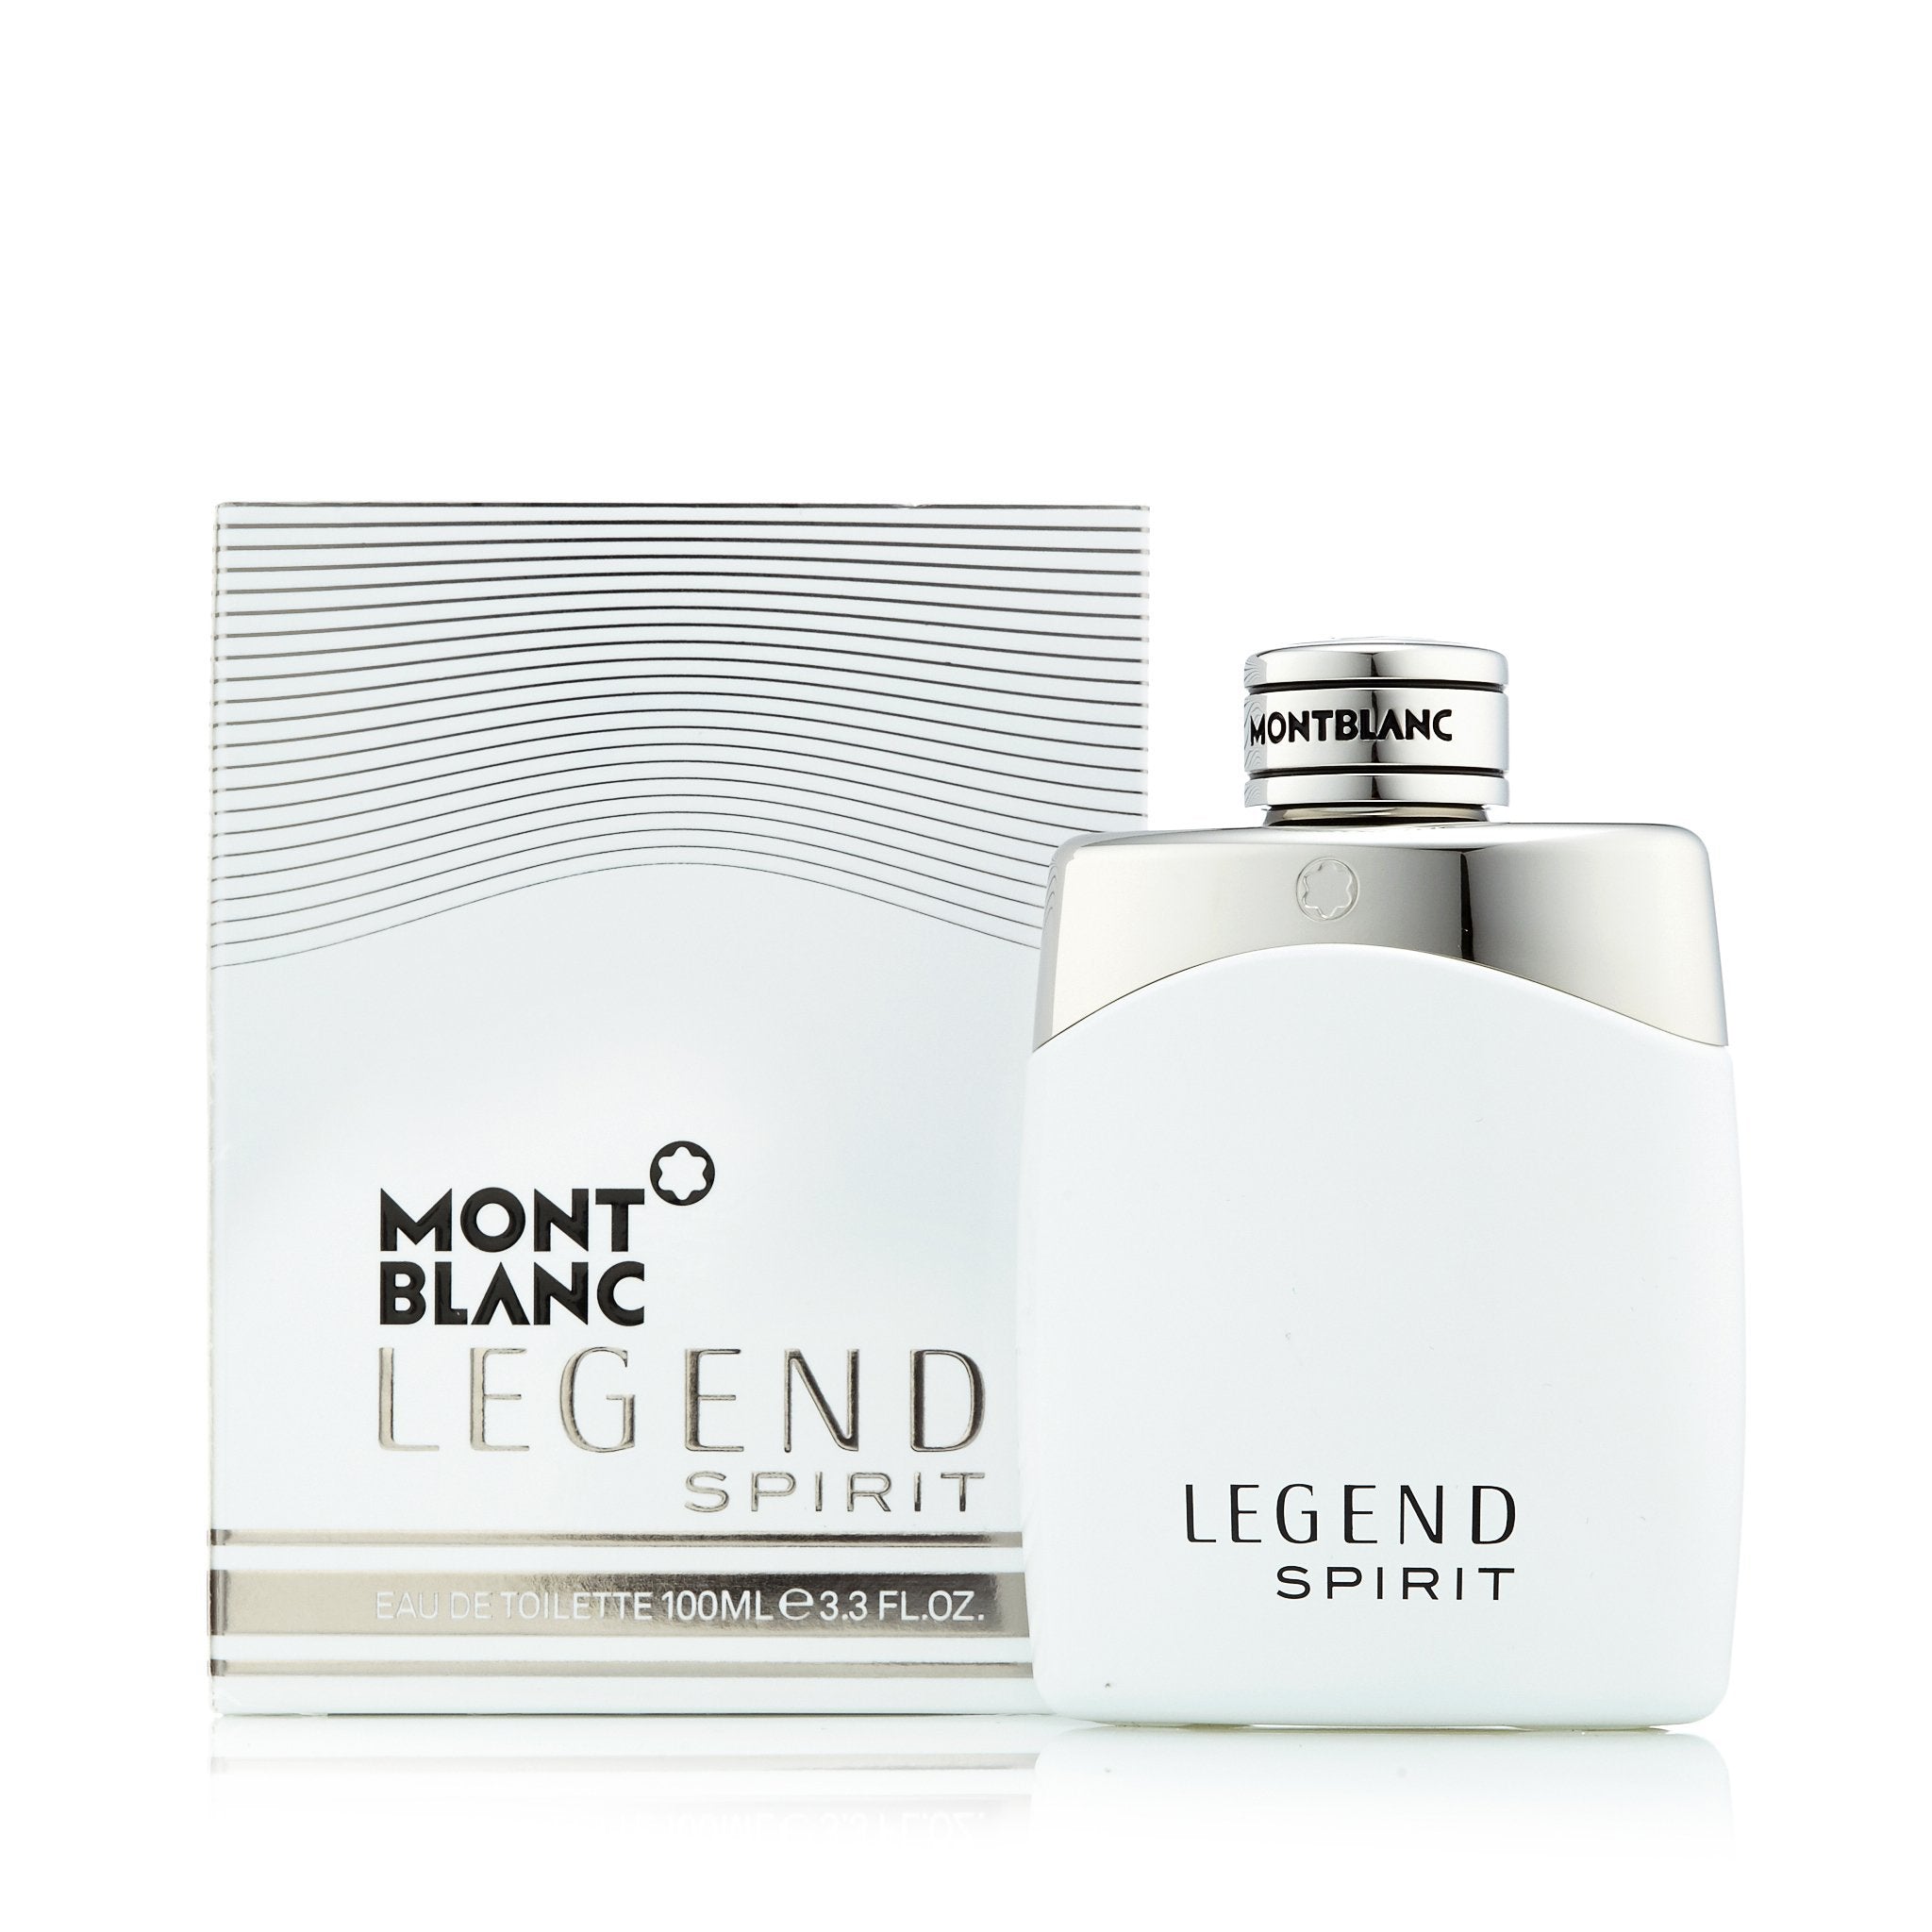 Mont Blanc Legend Spirit EDT Spray For Men - 3.3 fl oz bottle